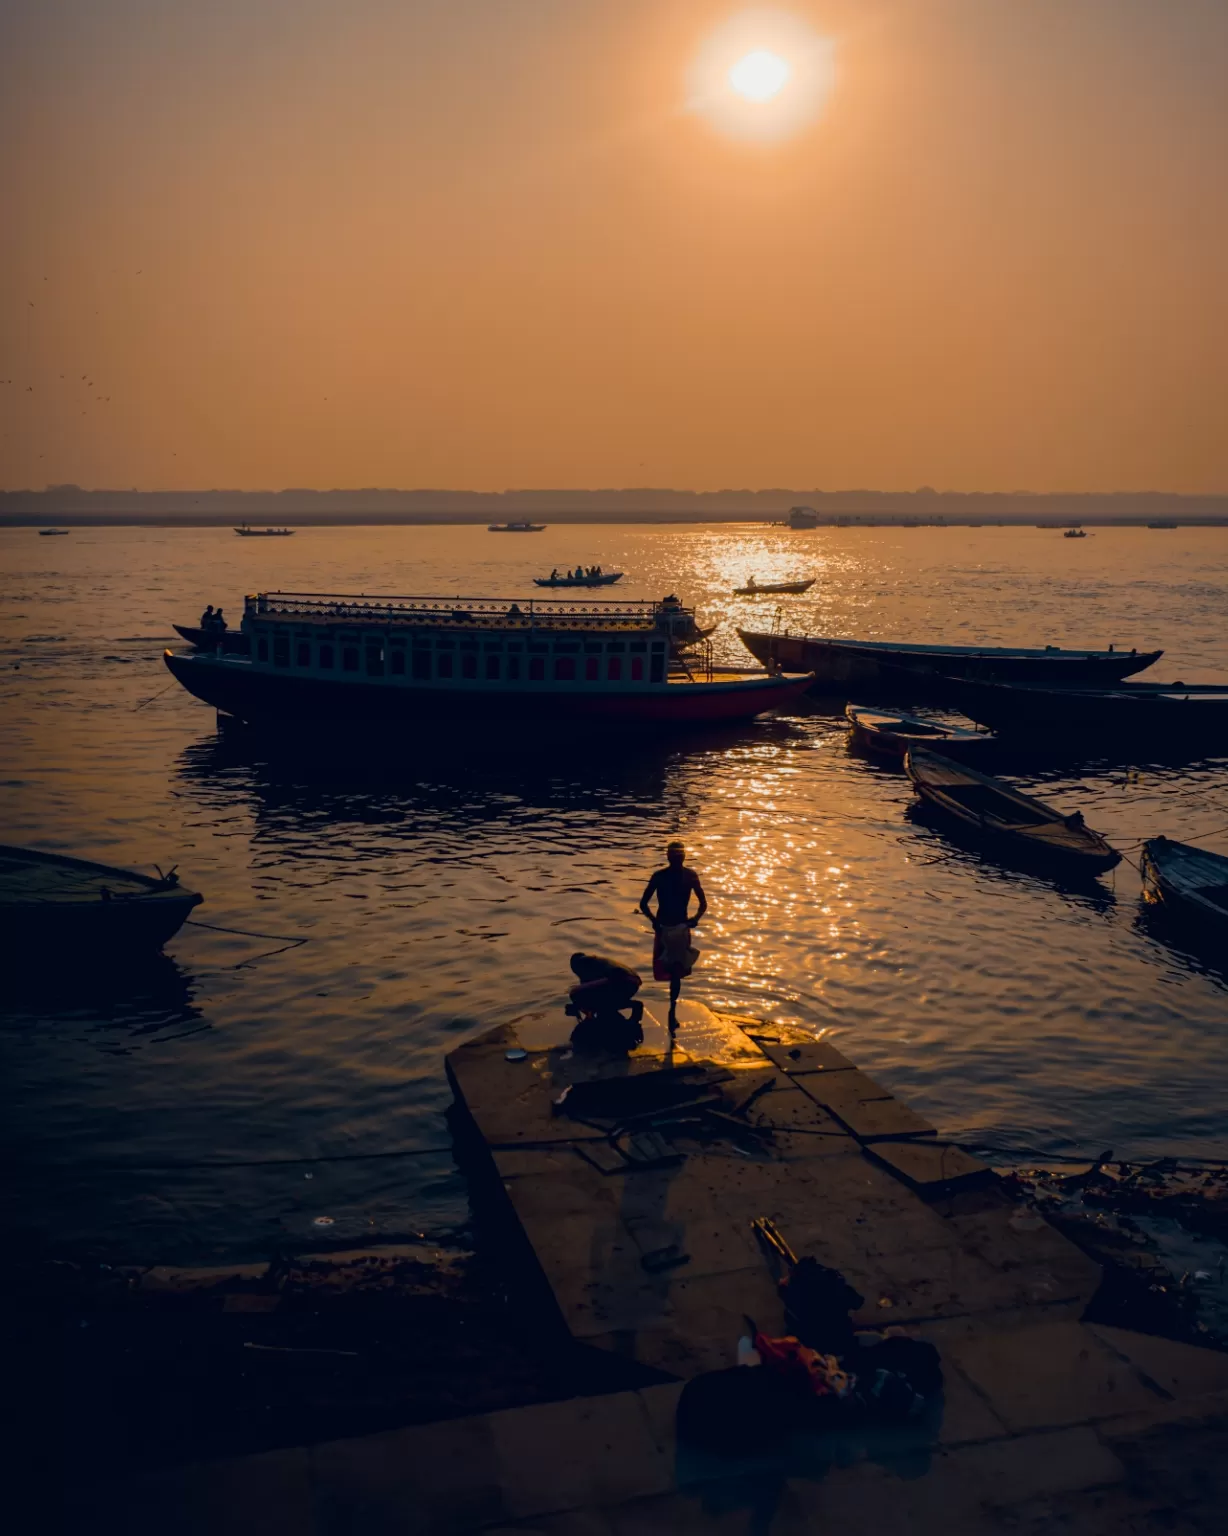 Photo of Varanasi By Harshal Nikale